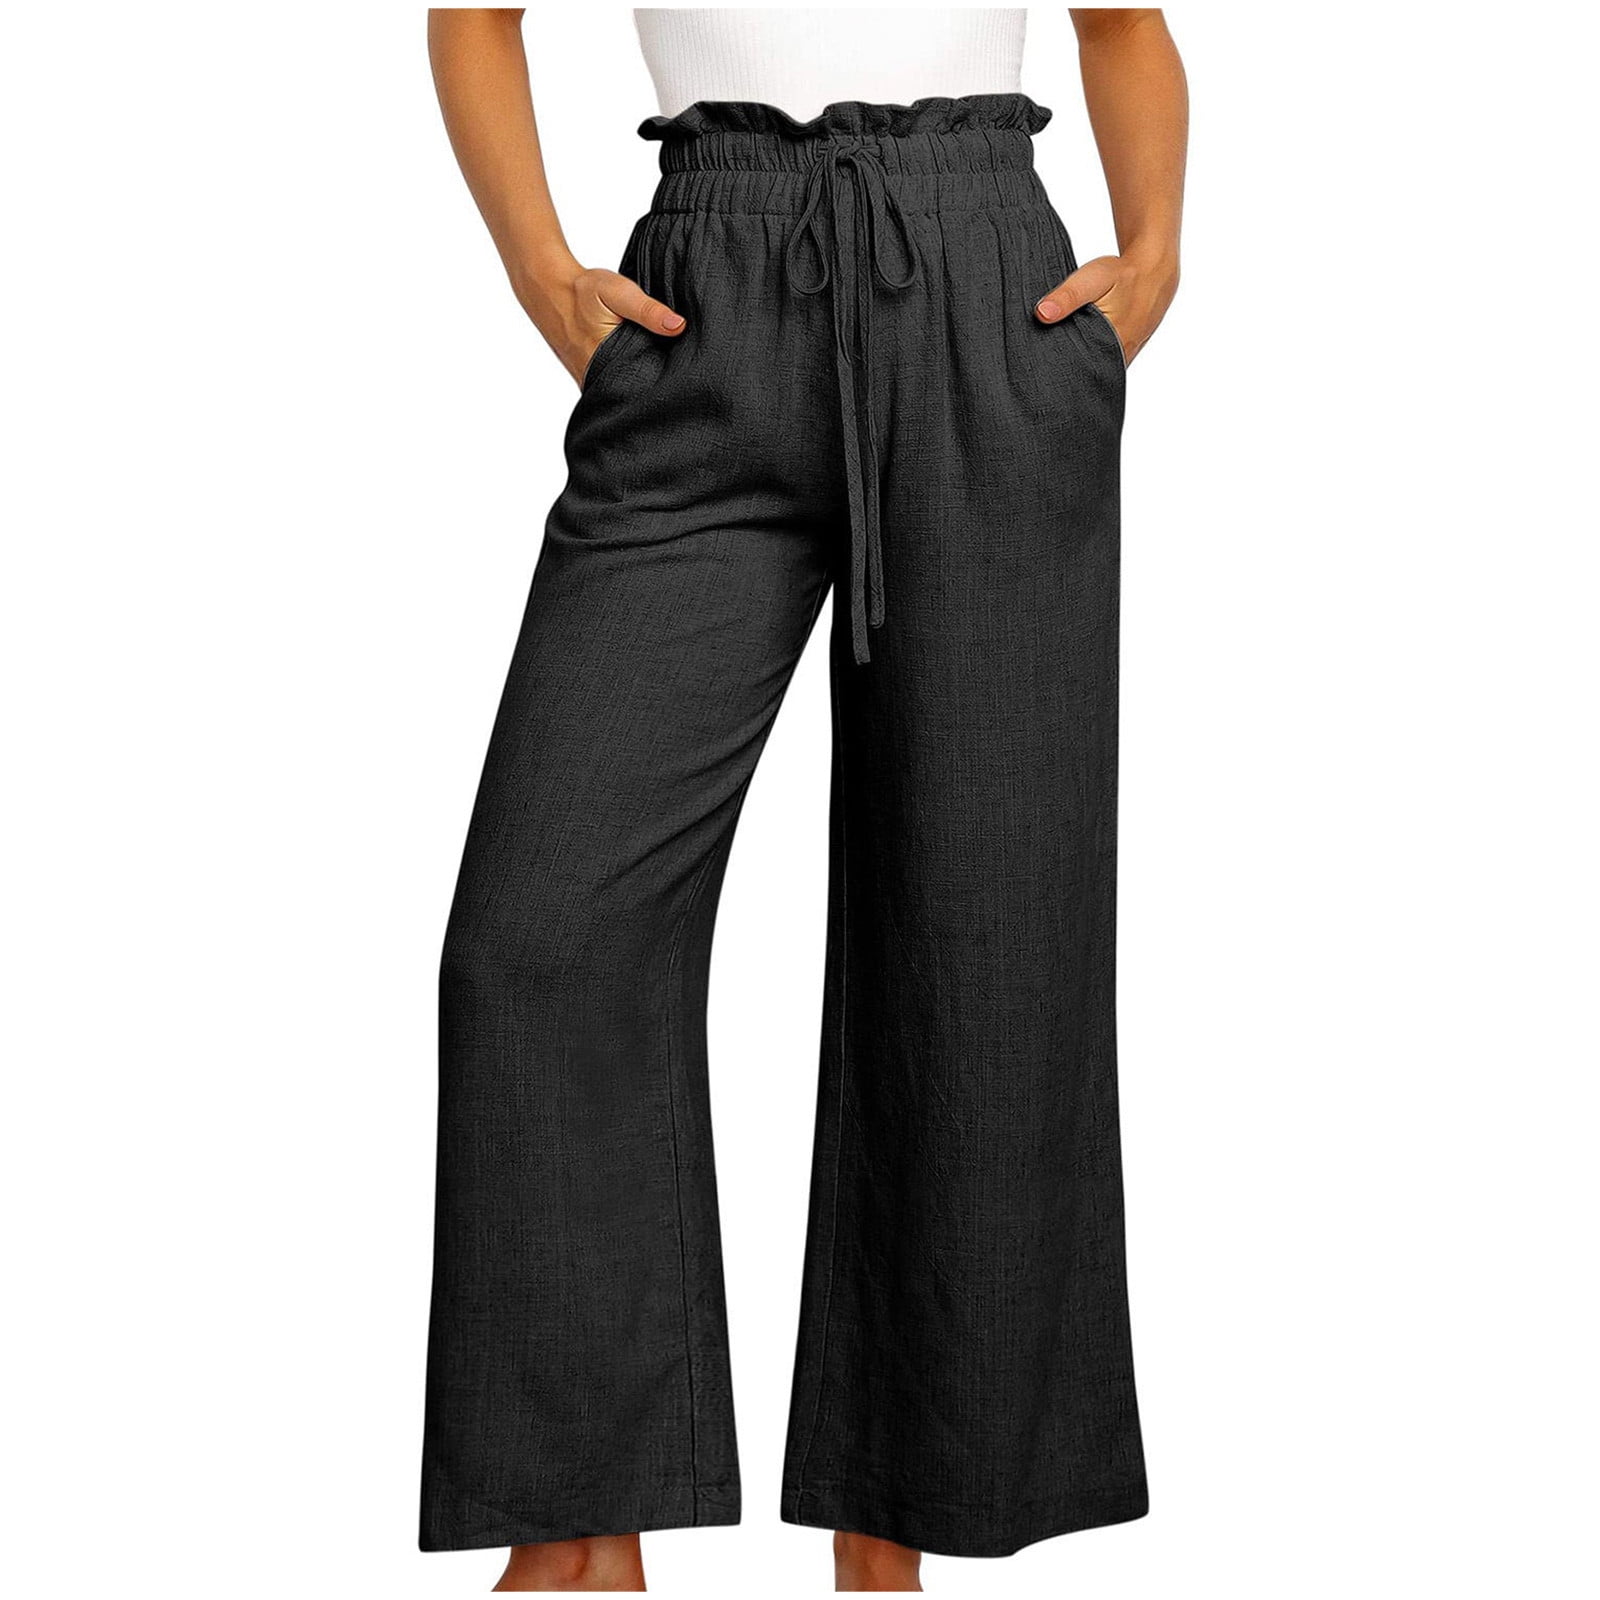 HBYJLZYG Cotton Linen Pants Womens, High Waist Pants For Women Elastic ...